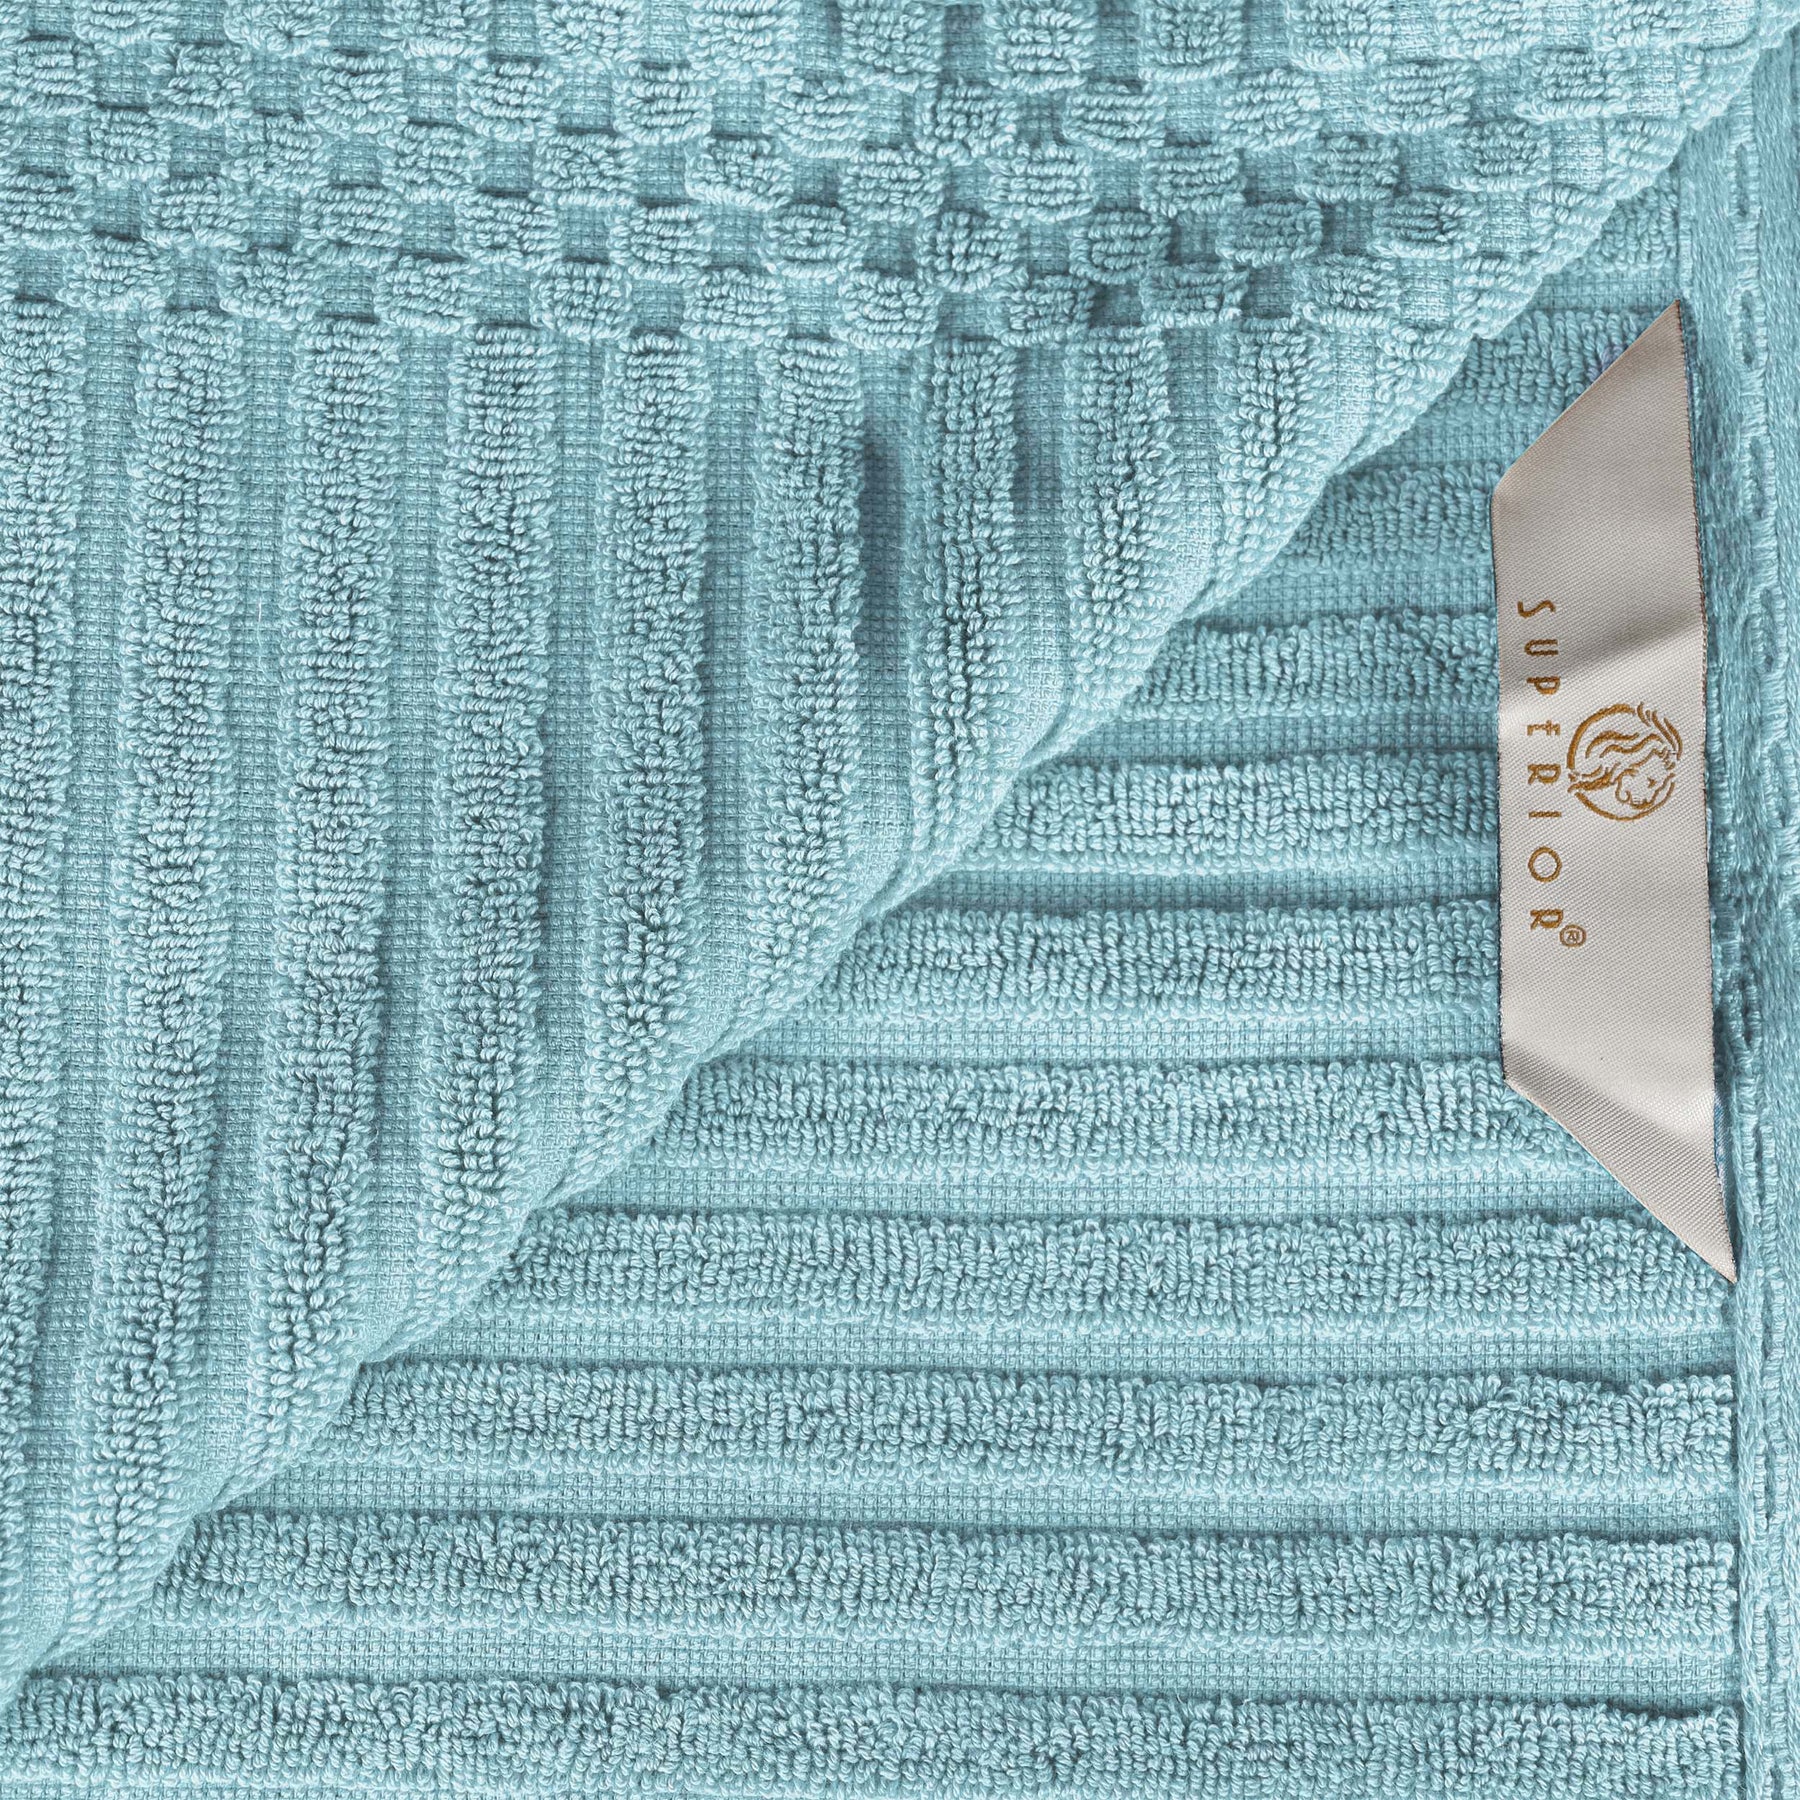 Ribbed Textured Cotton Medium Weight 8 Piece Towel Set - Slate Blue